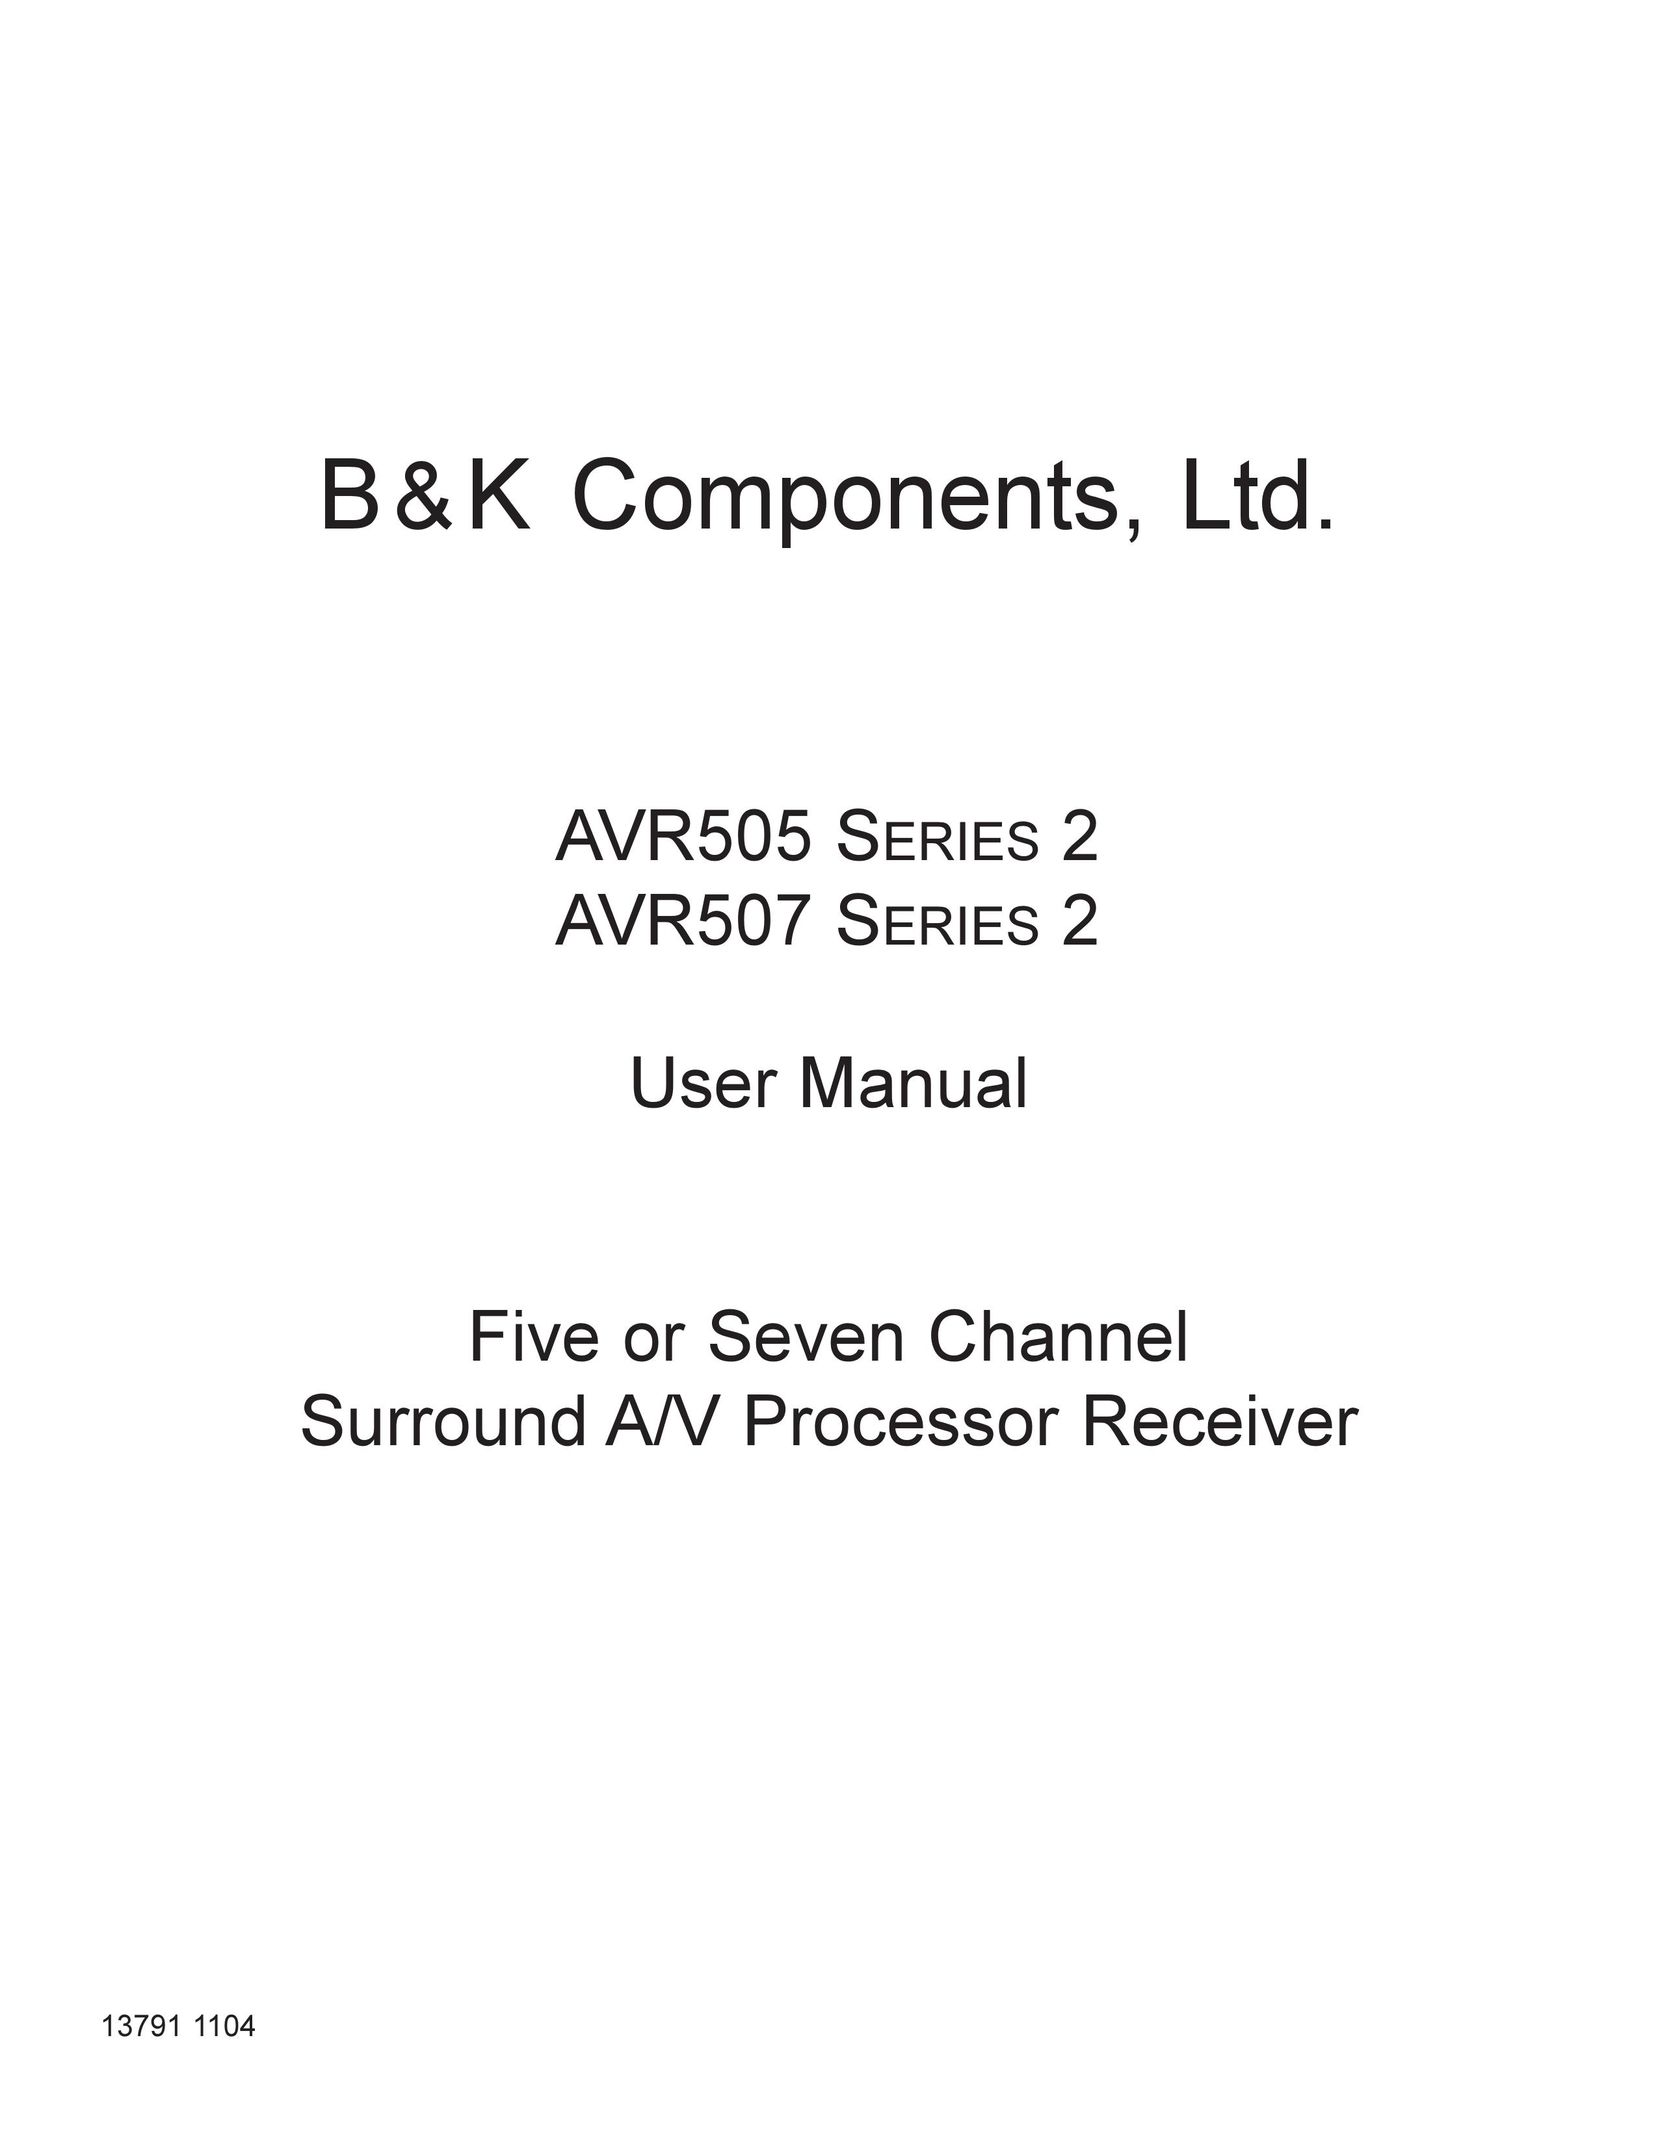 B&K AVR507 SERIES 2 Stereo Receiver User Manual